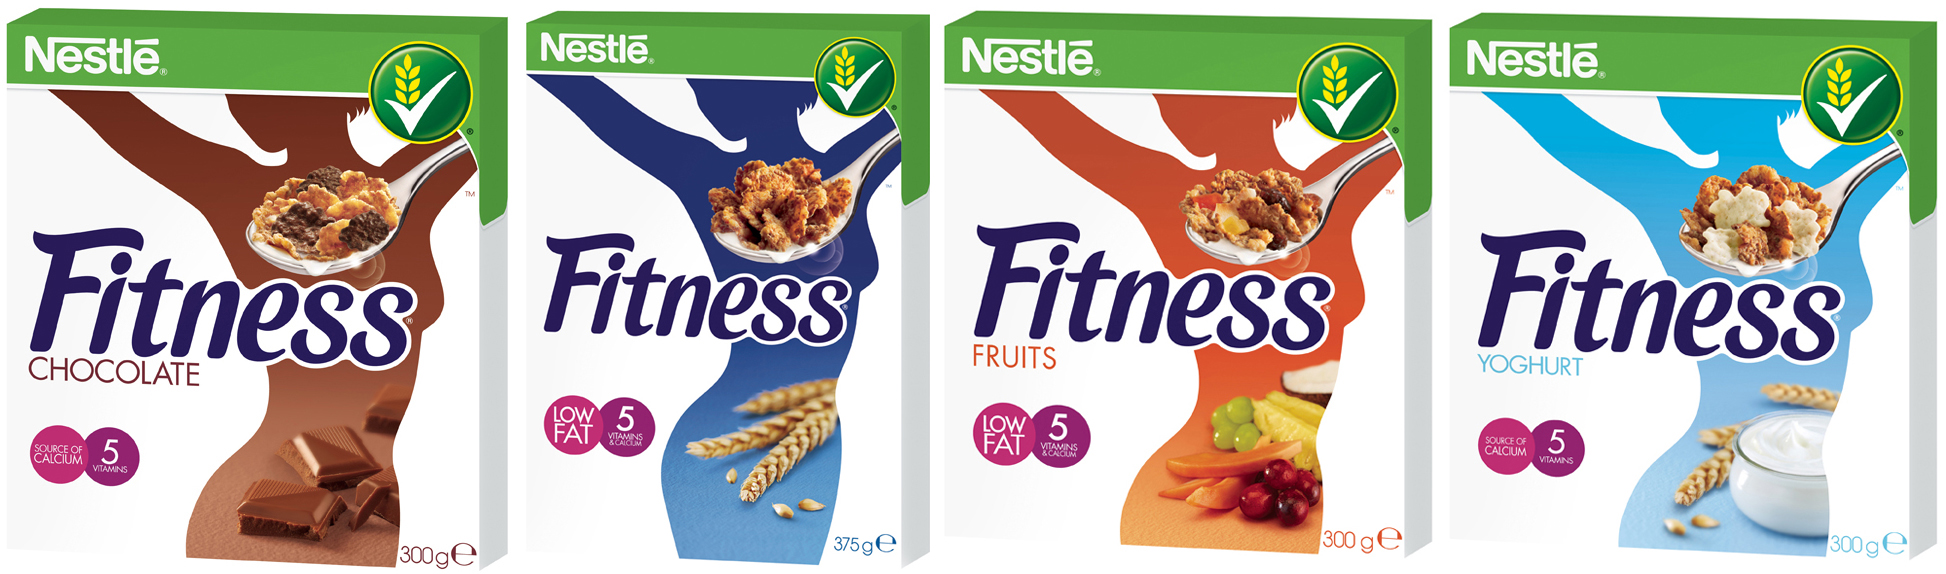 Nestlé fitness mix.jpg